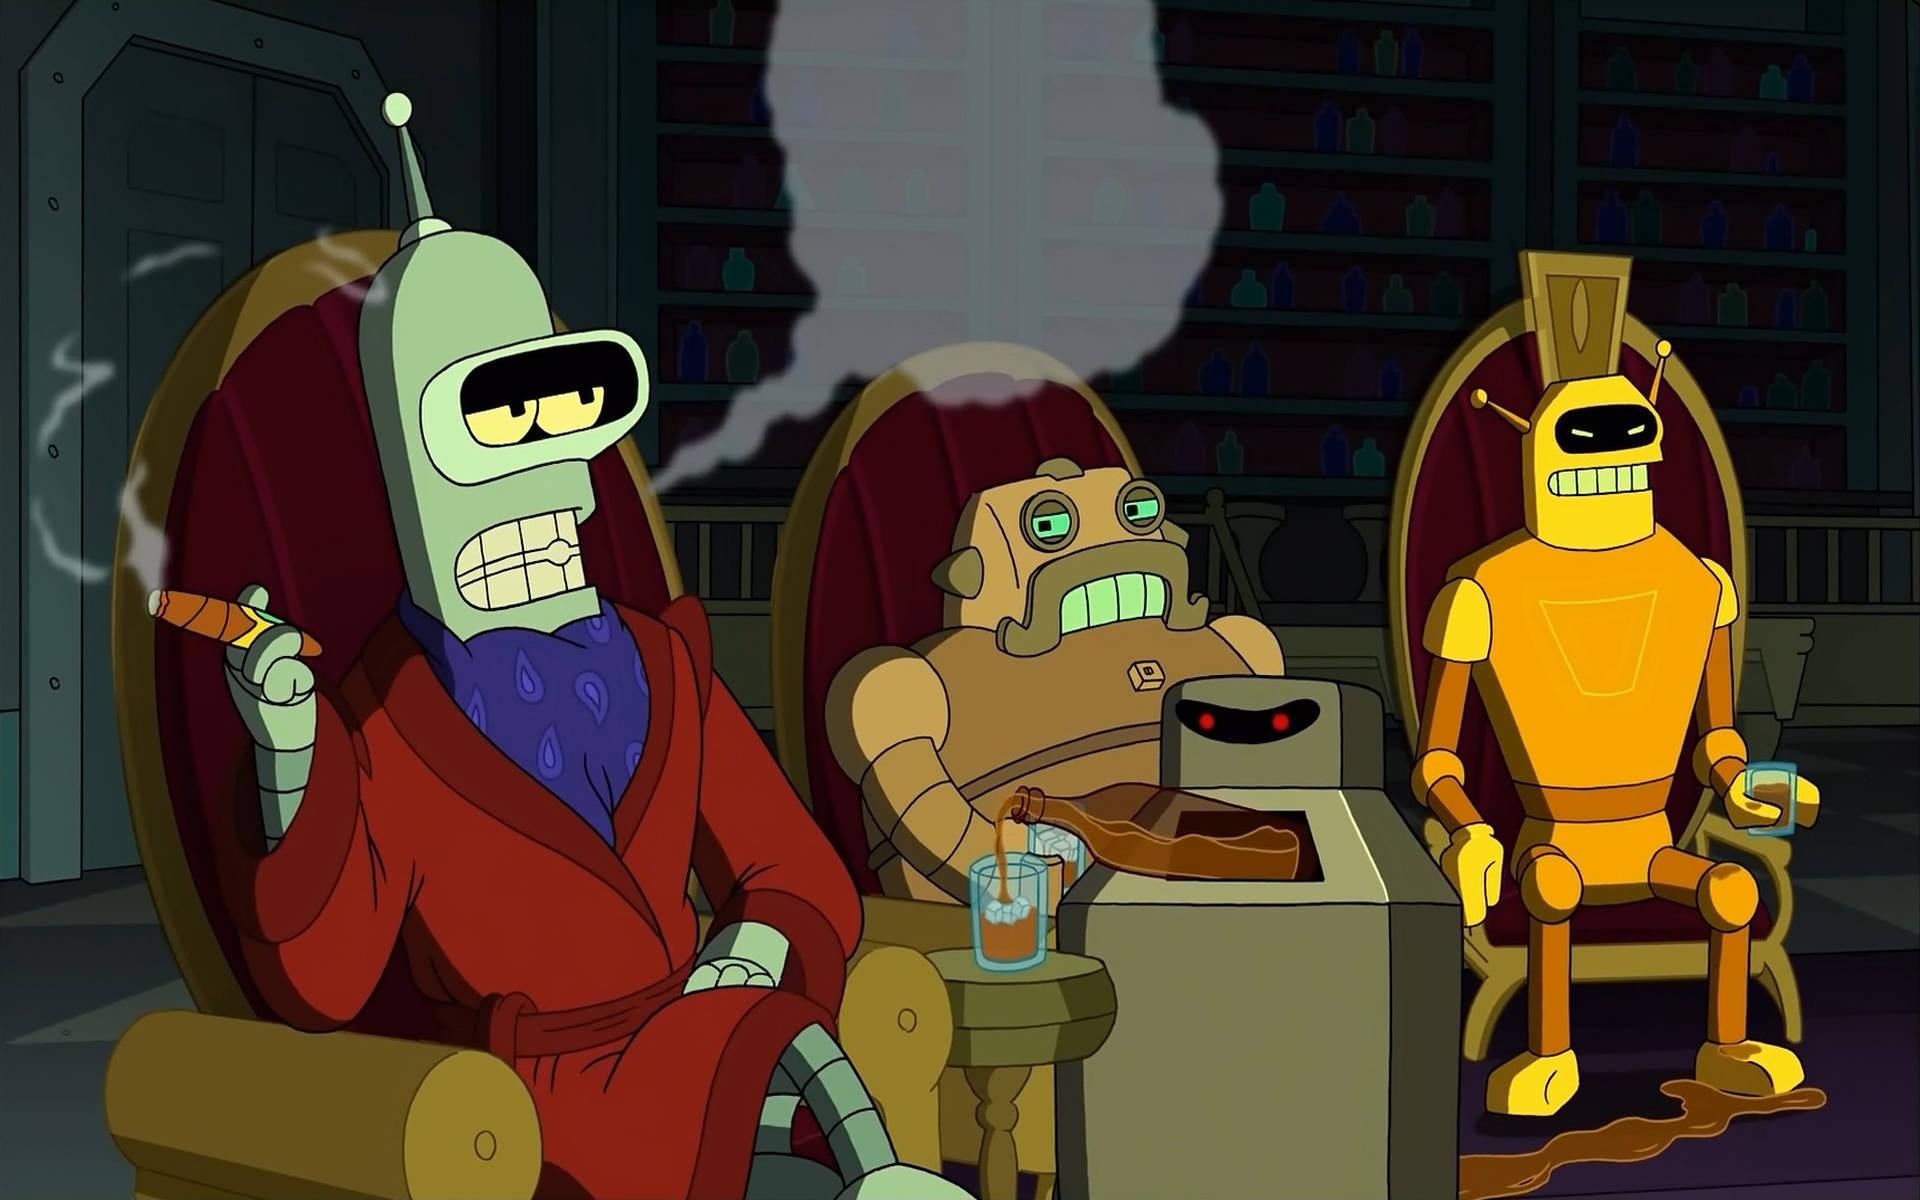 Caption: Bender, The Audacious Robot Of Futurama Background